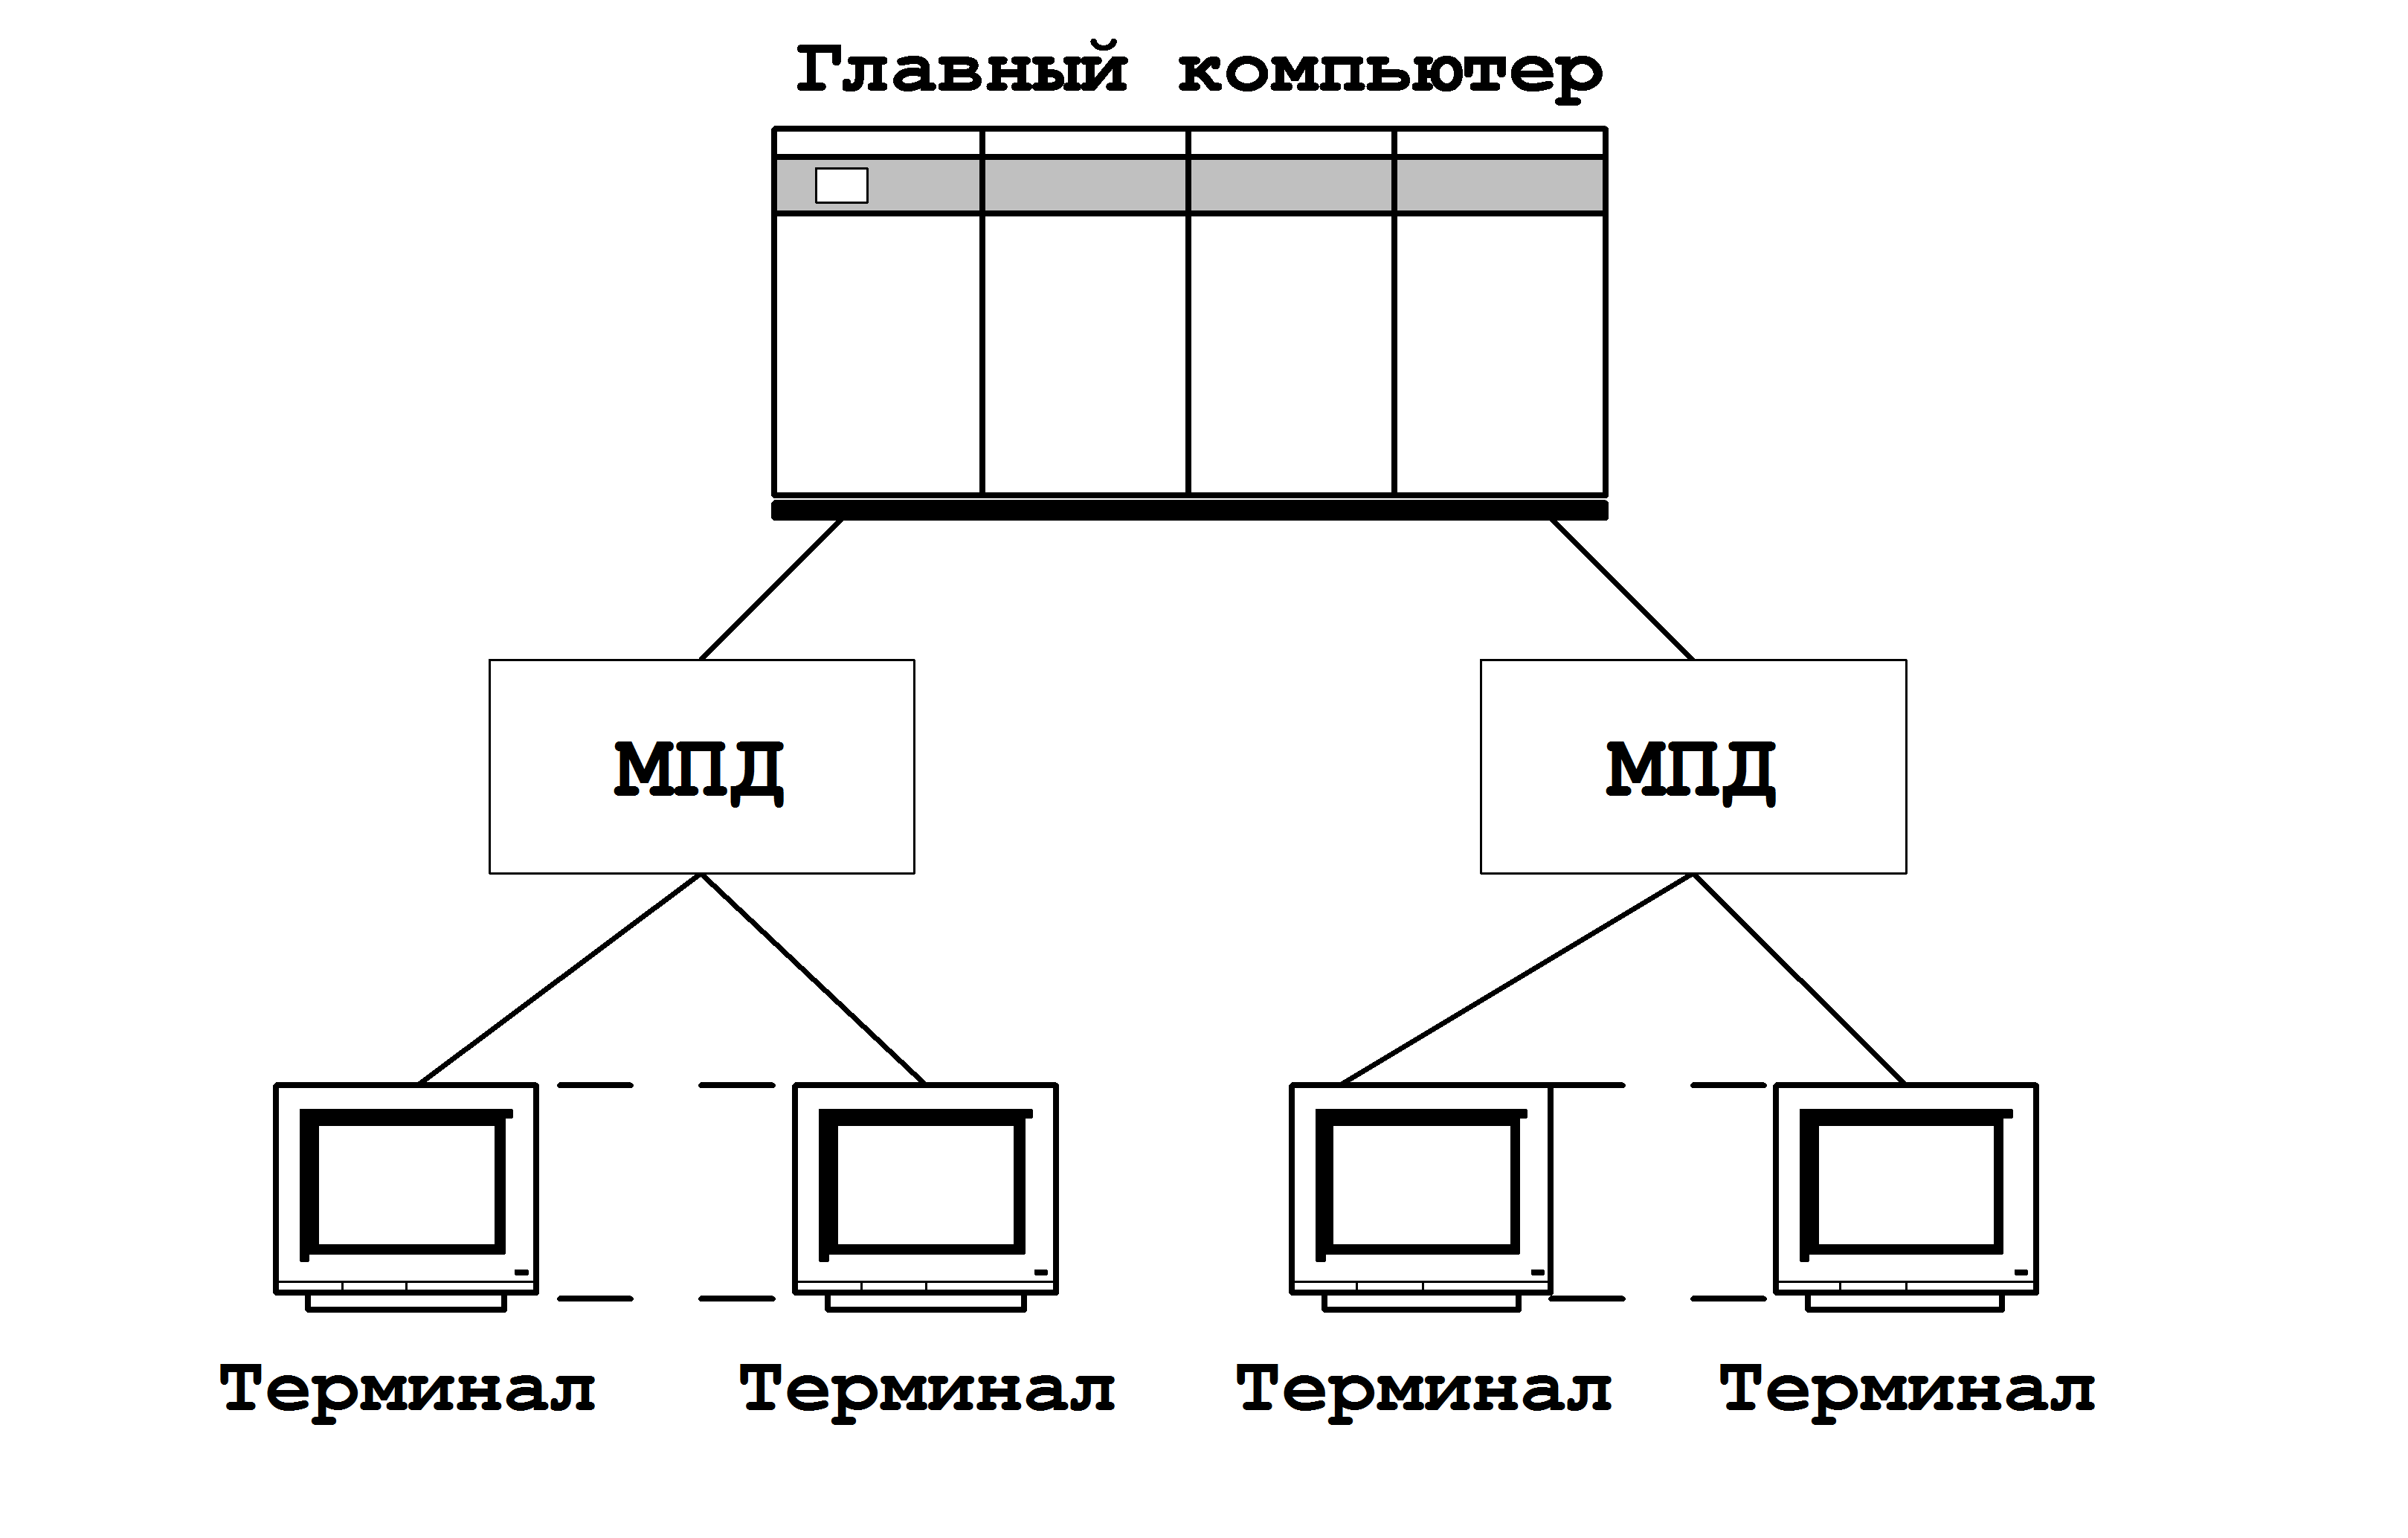 Схема терминал-главный компьютер архитектуры сети. Архитектура сети терминал. Терминал главный компьютер. Терминальная архитектура. Терминал главная